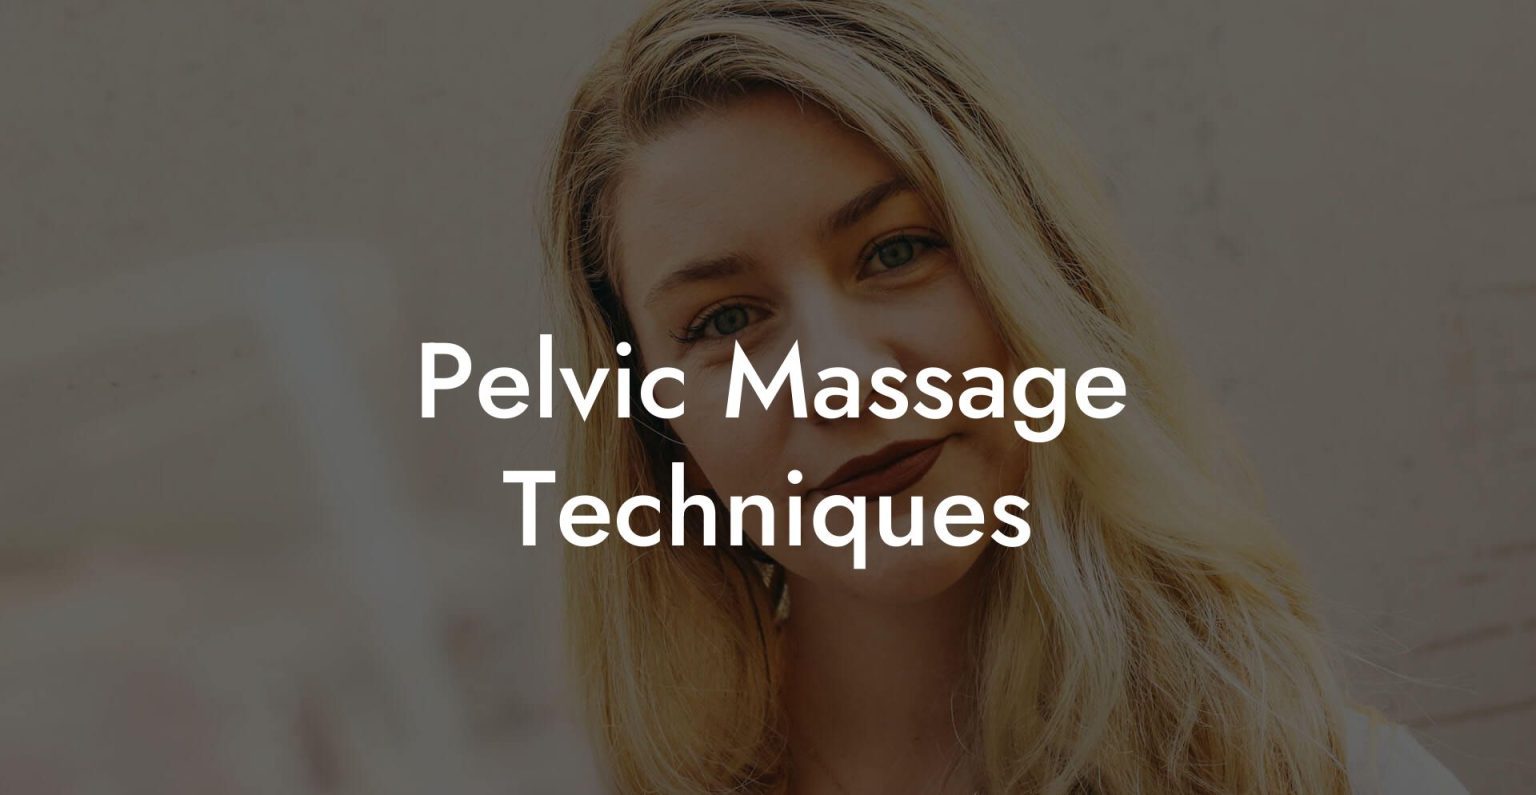 Pelvic Massage Techniques Glutes Core And Pelvic Floor 0838